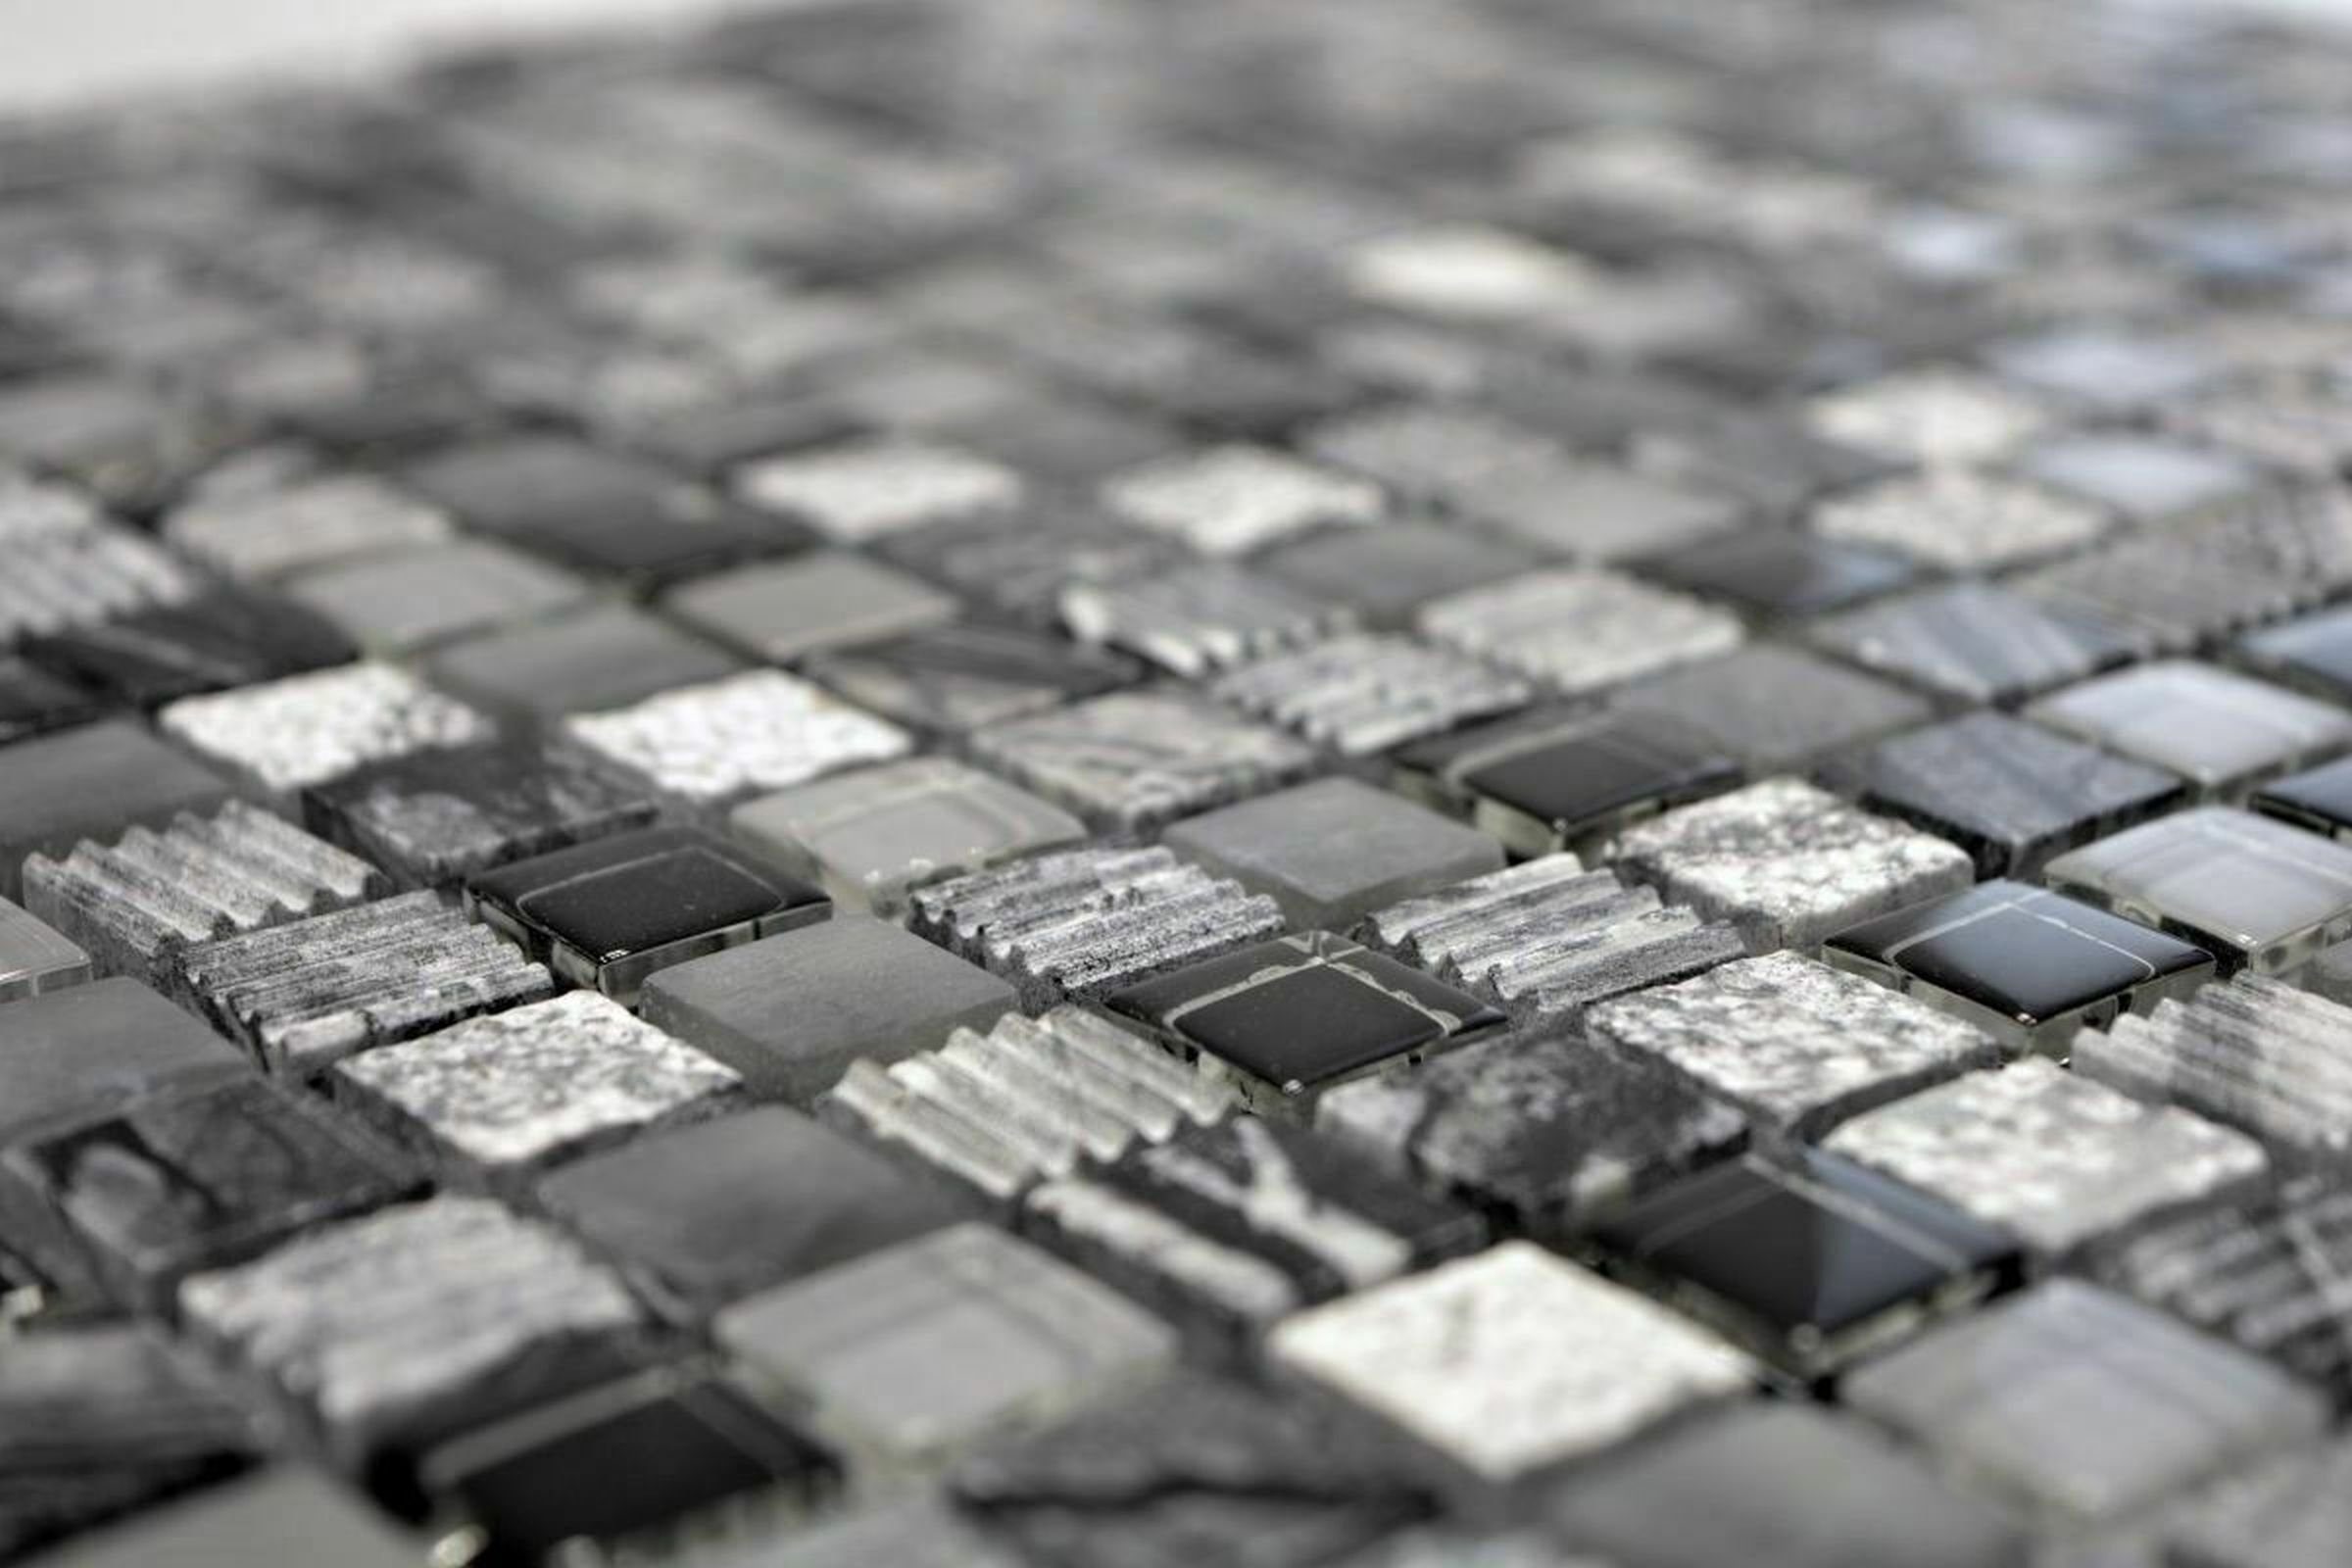 Naturstein Mosaikfliesen Mosani Fliese schwarz Glasmosaik Mosaikfliese grau